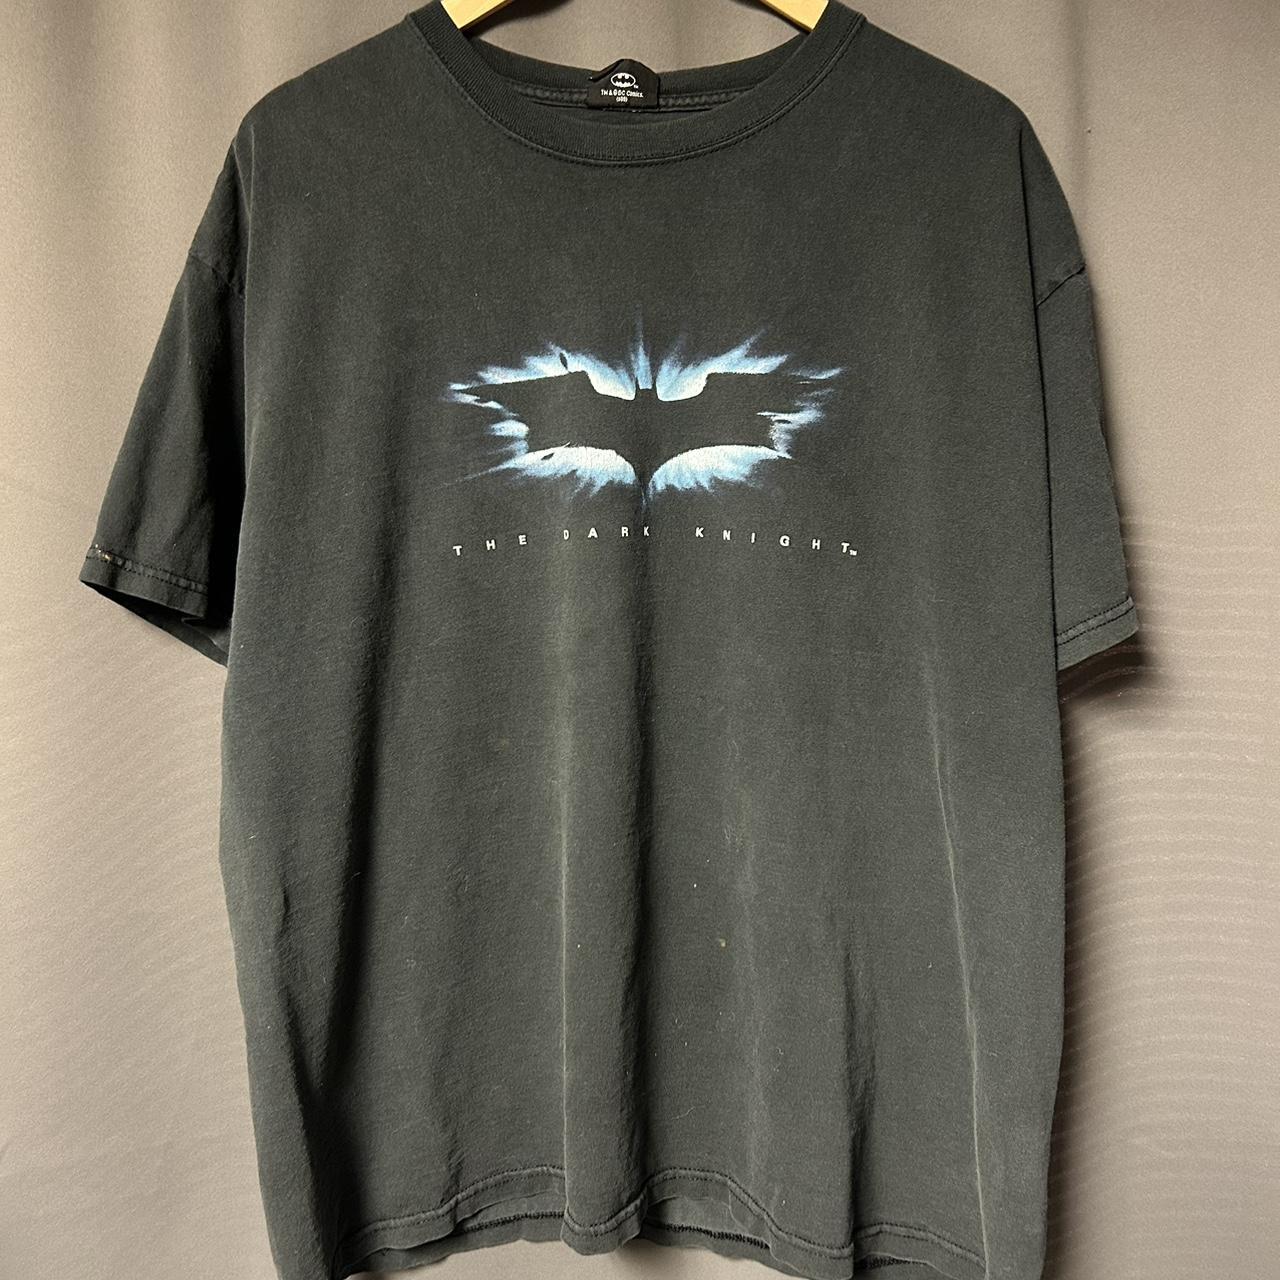 Vintage 2008 The Dark Knight Promo T Shirt Sz